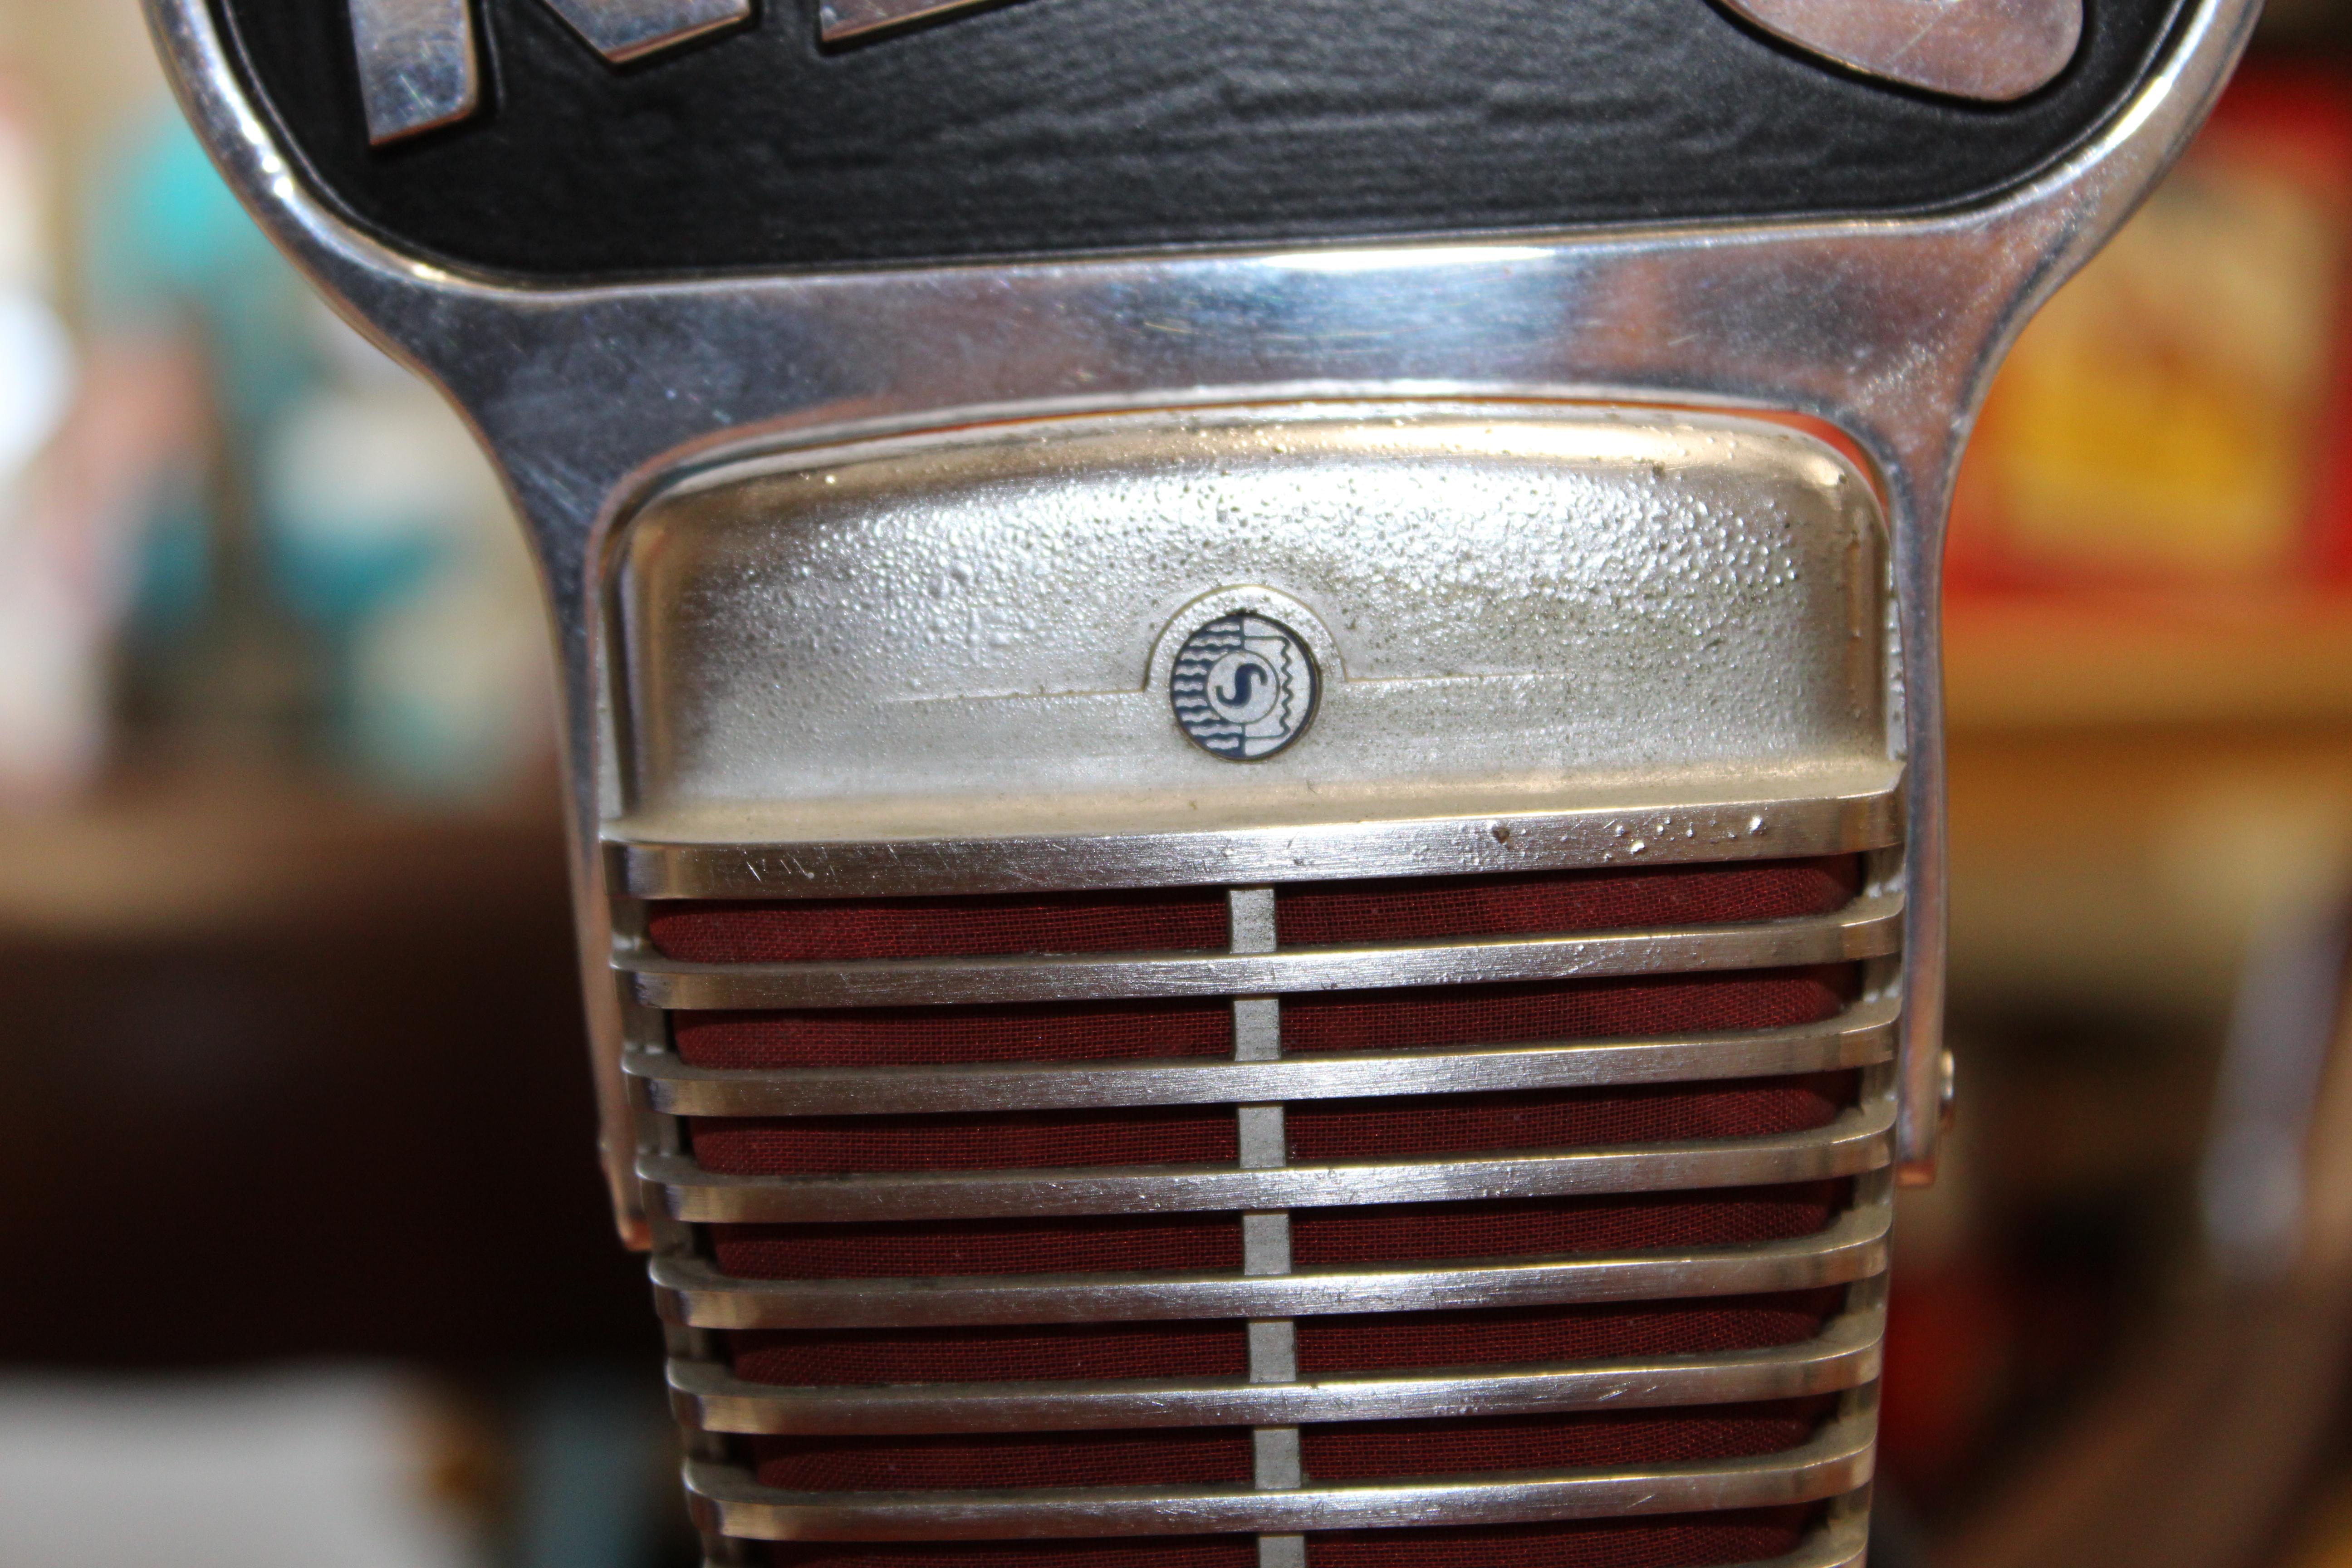 1950s microphone